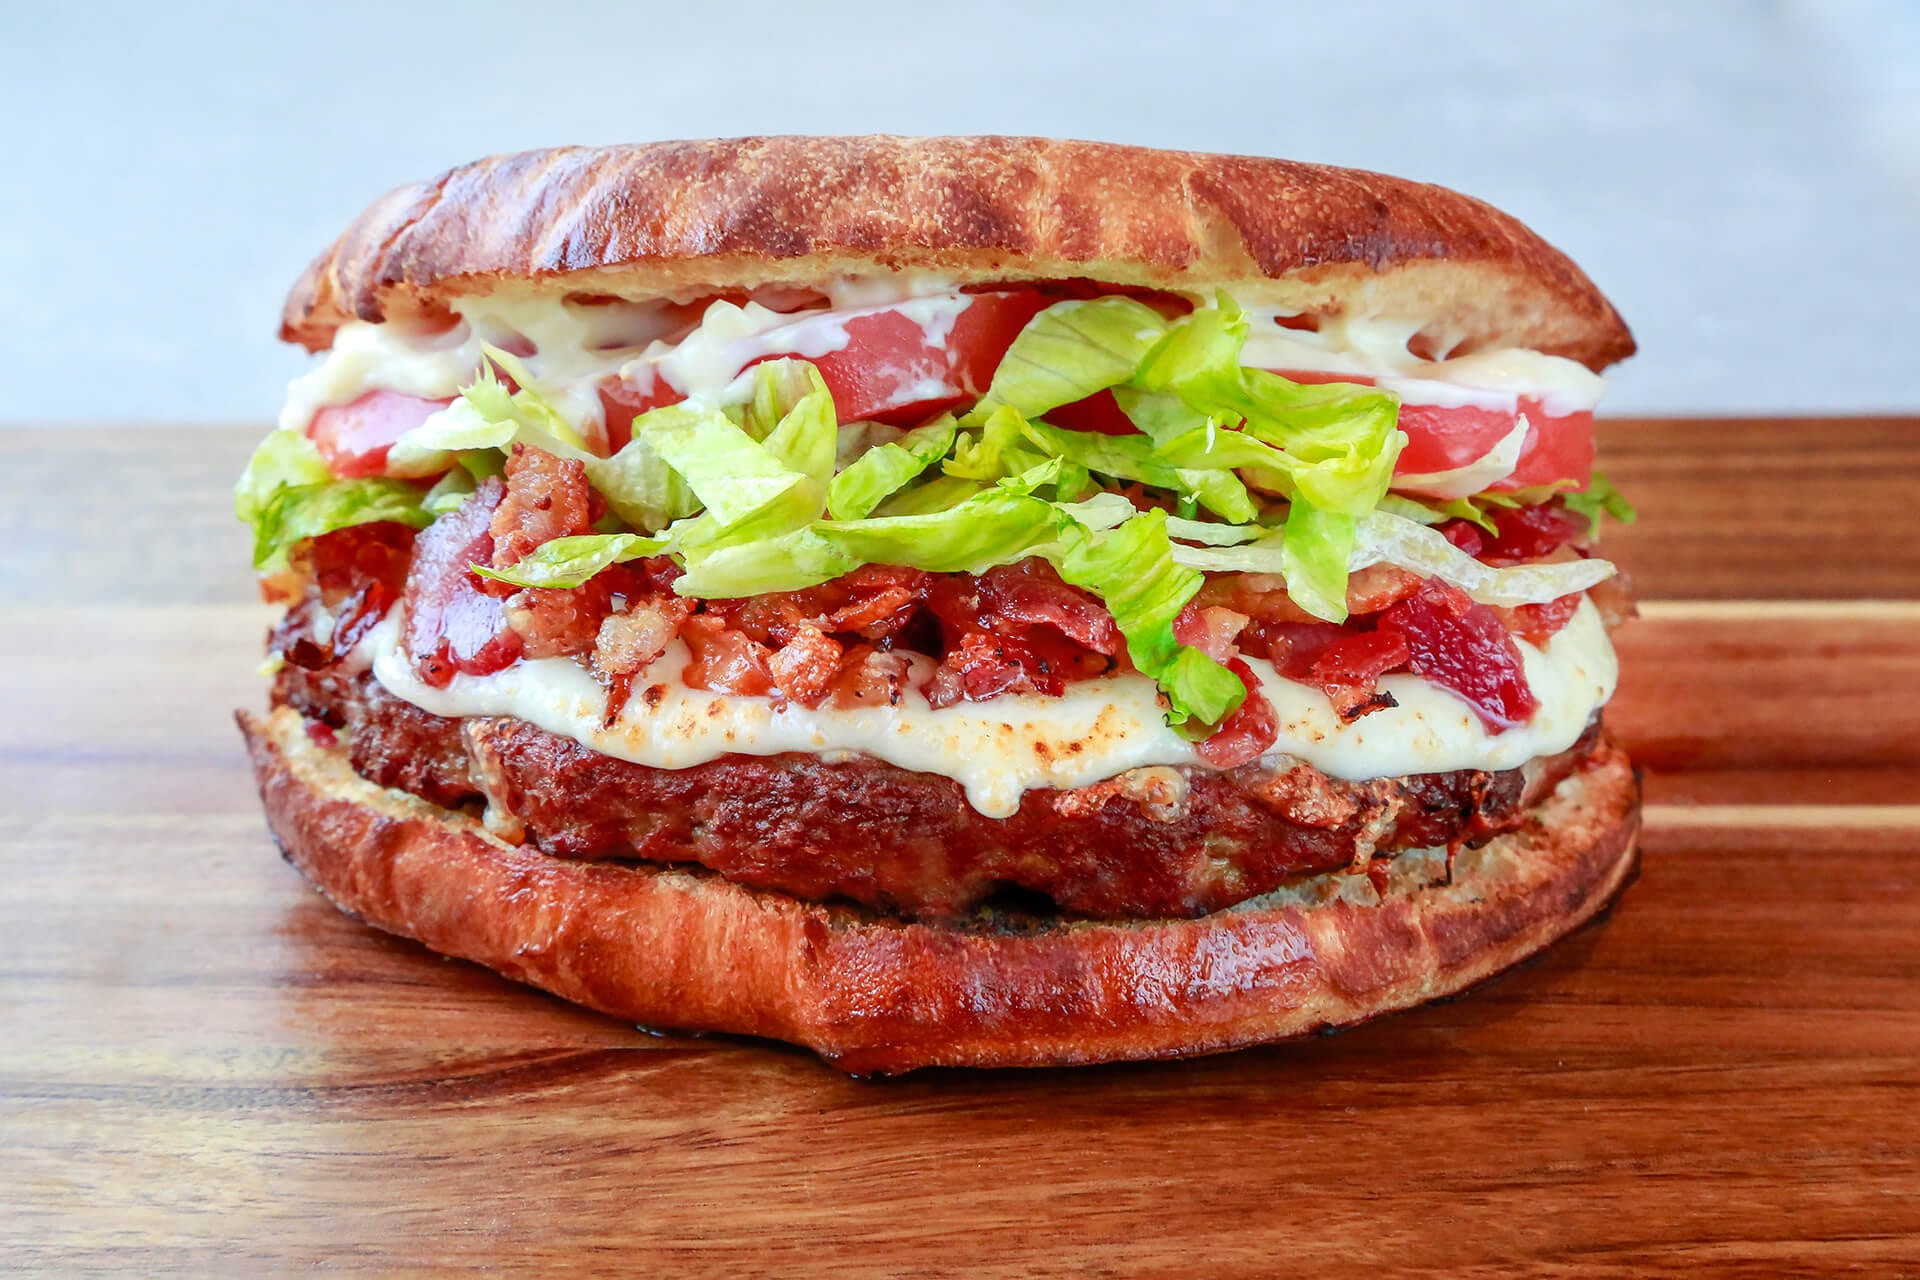 American Hamburger - Cassano's - The Pizza King